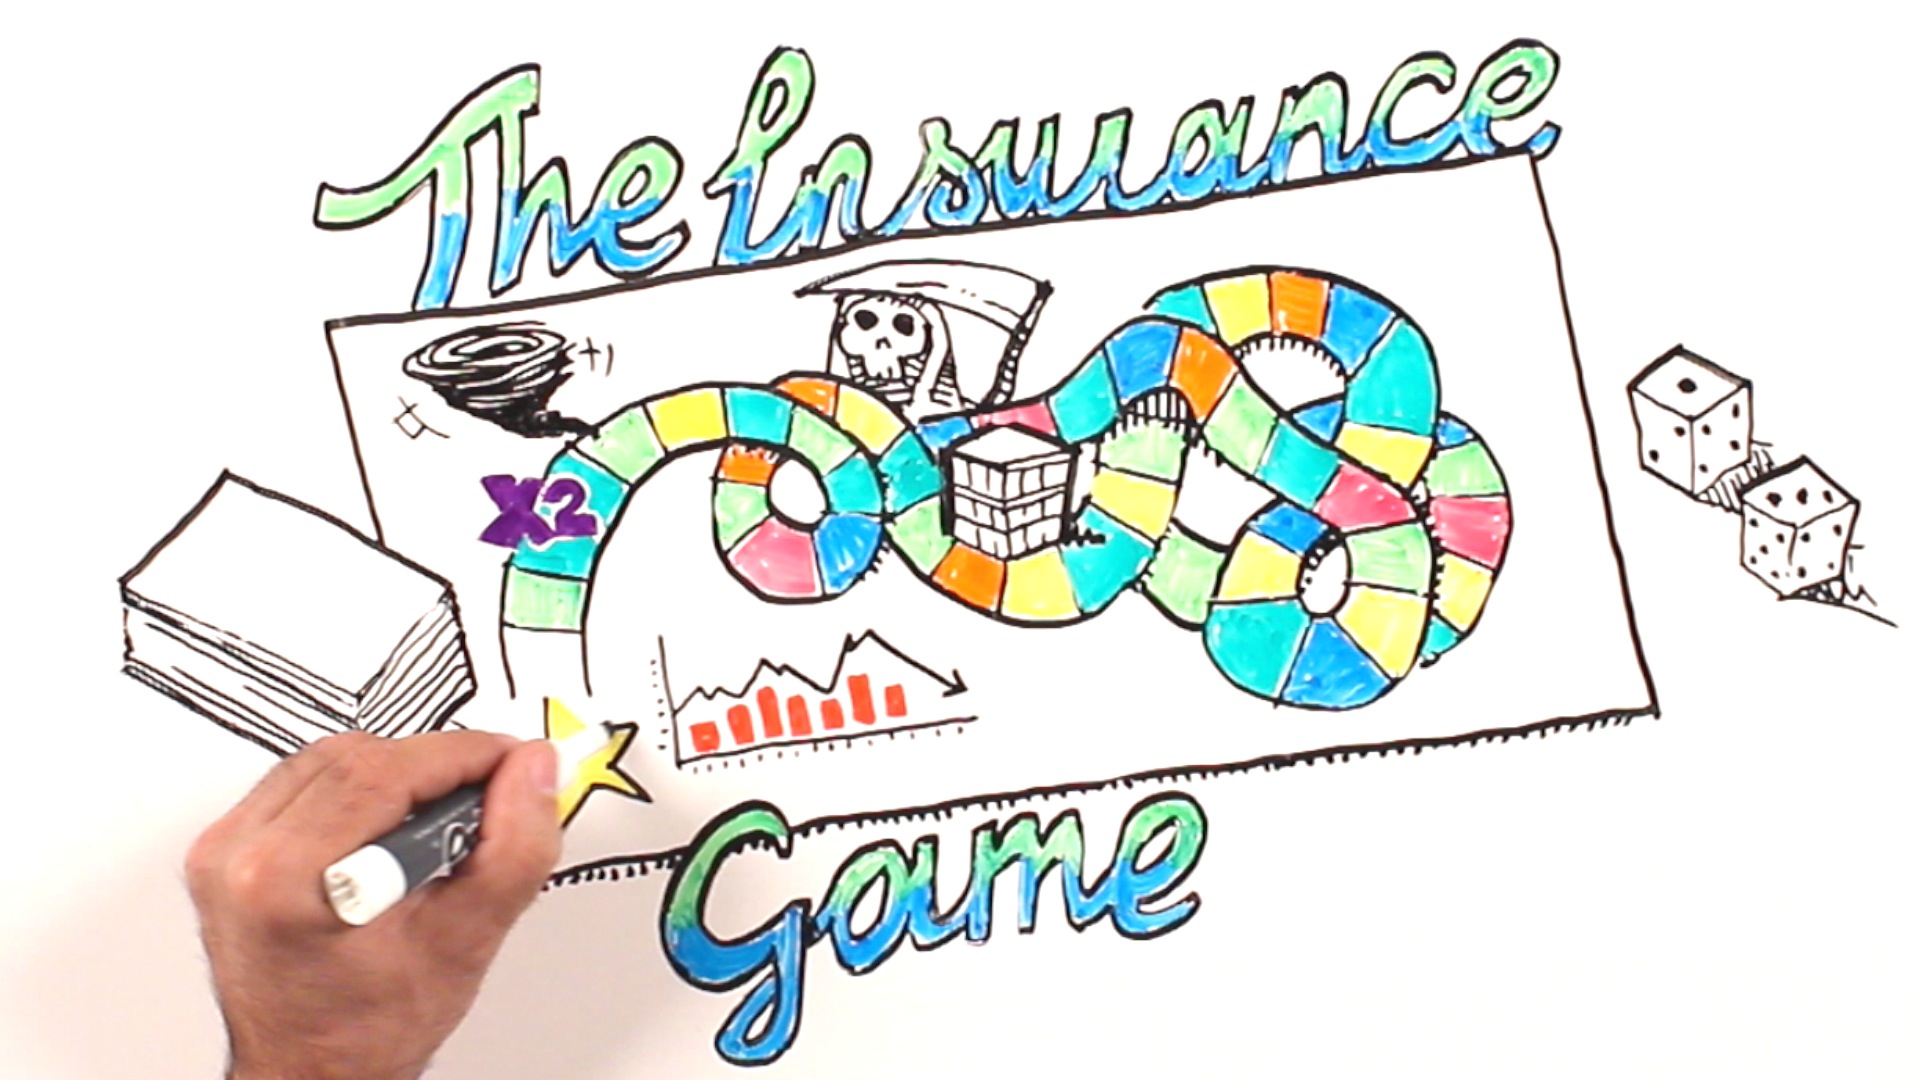 McClone Insurance Whiteboard Video Storyboard